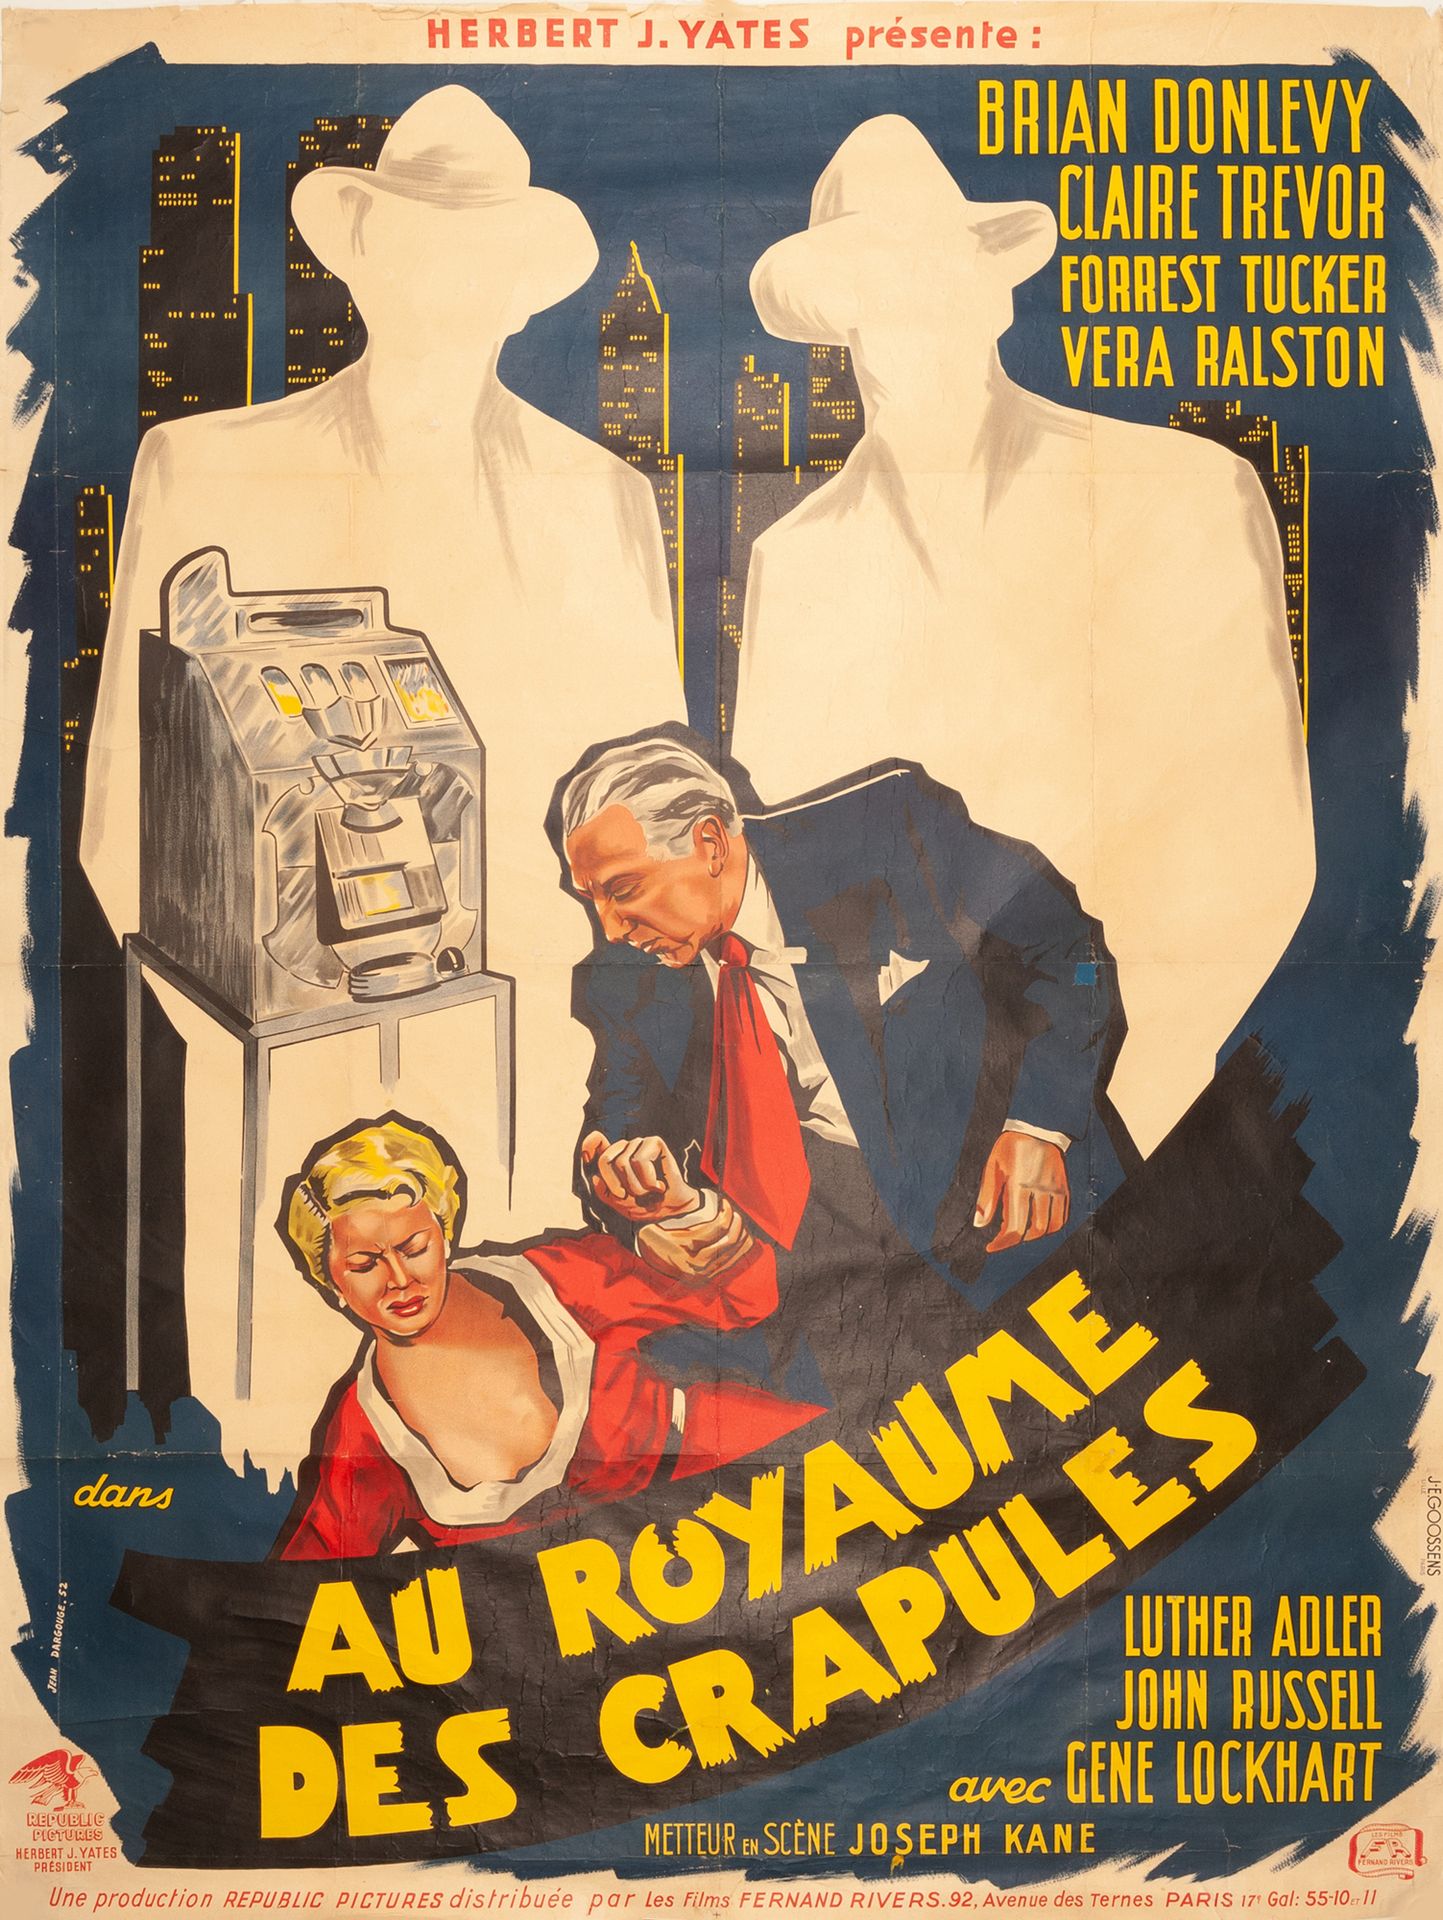 Null AU ROYAUME DES CRAPULES / HOODLUM EMPIRE Joseph Kane. 1952.
120 x 160 cm. M&hellip;